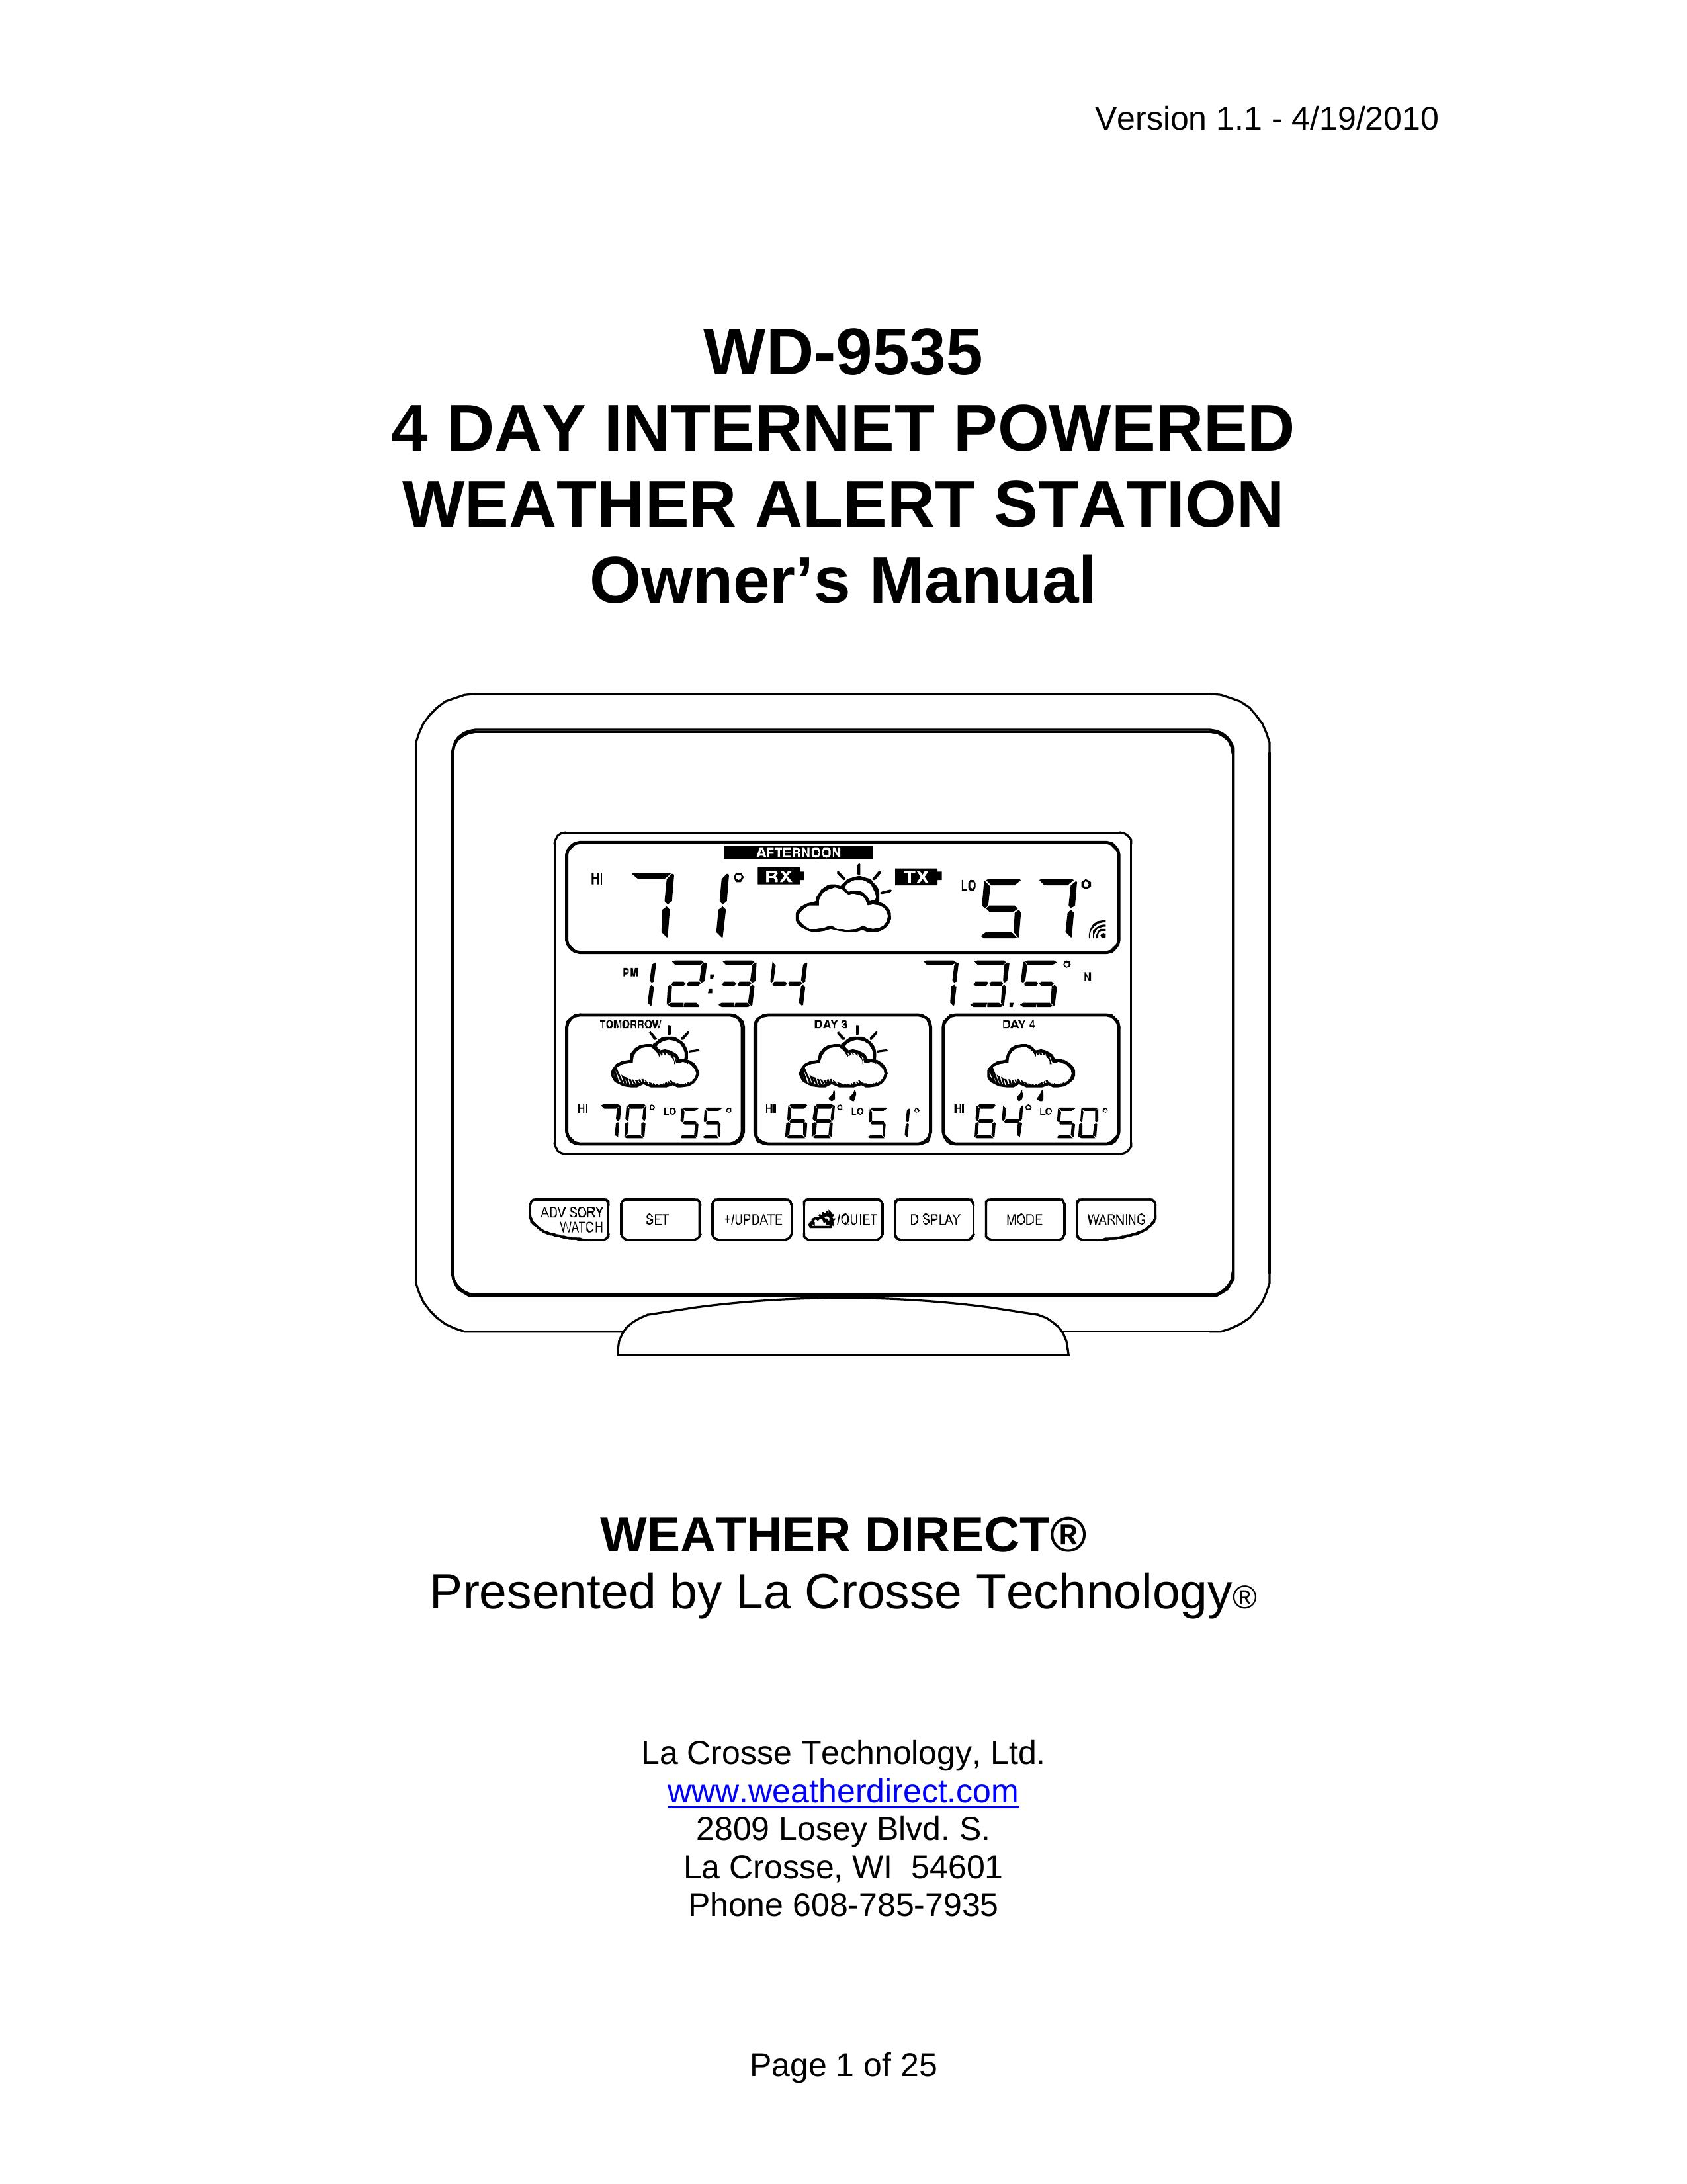 La Crosse Technology WD-9535 Weather Radio User Manual